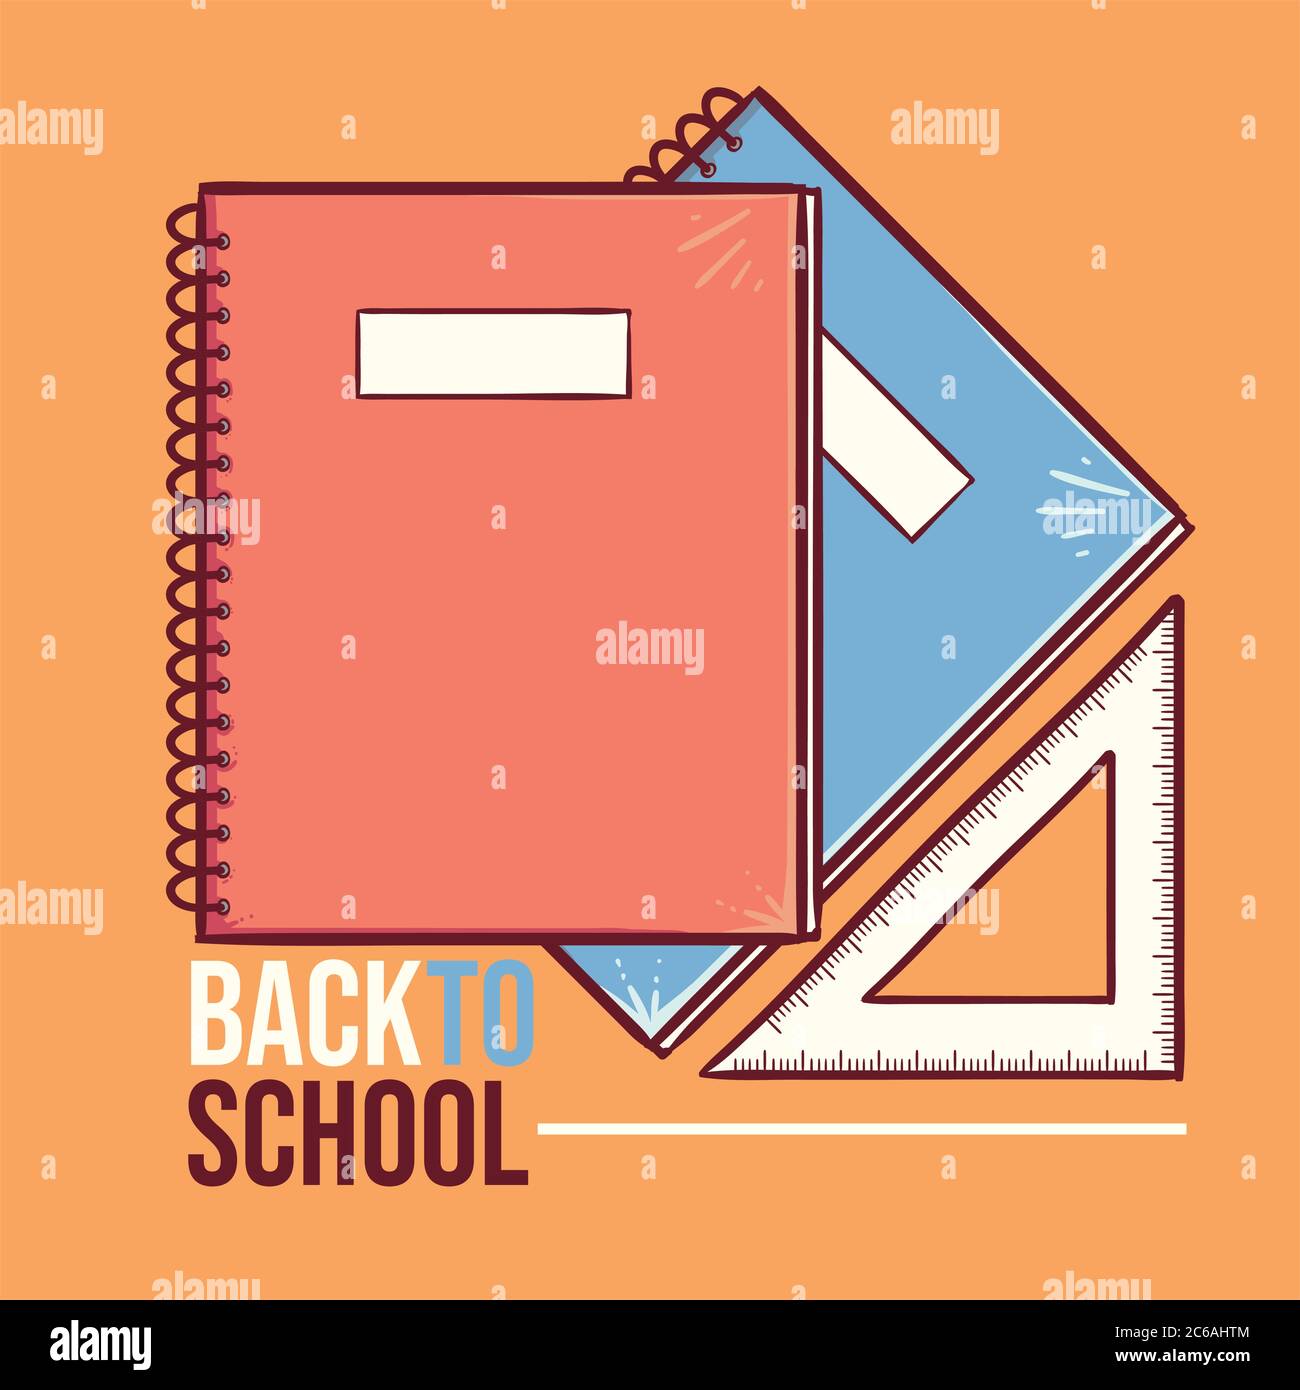 back to school illustration / logo Stock Vector